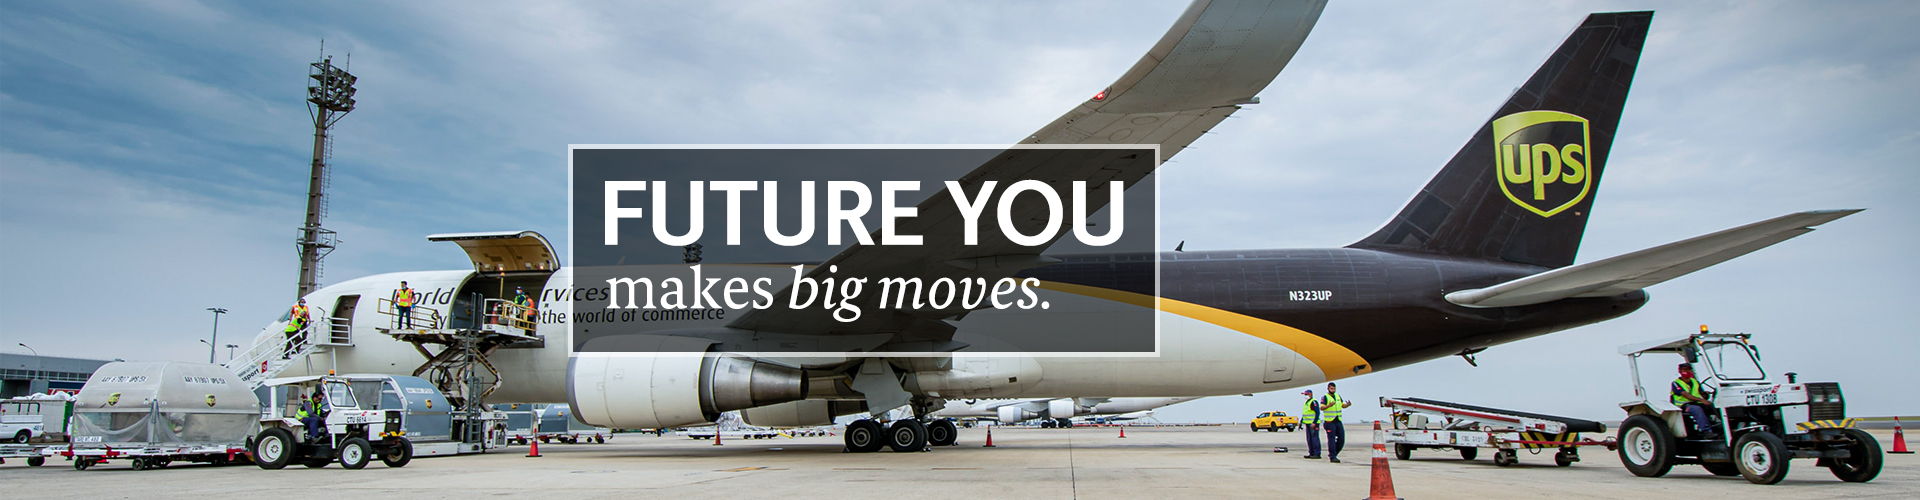 FUTURE YOU makes big moves.